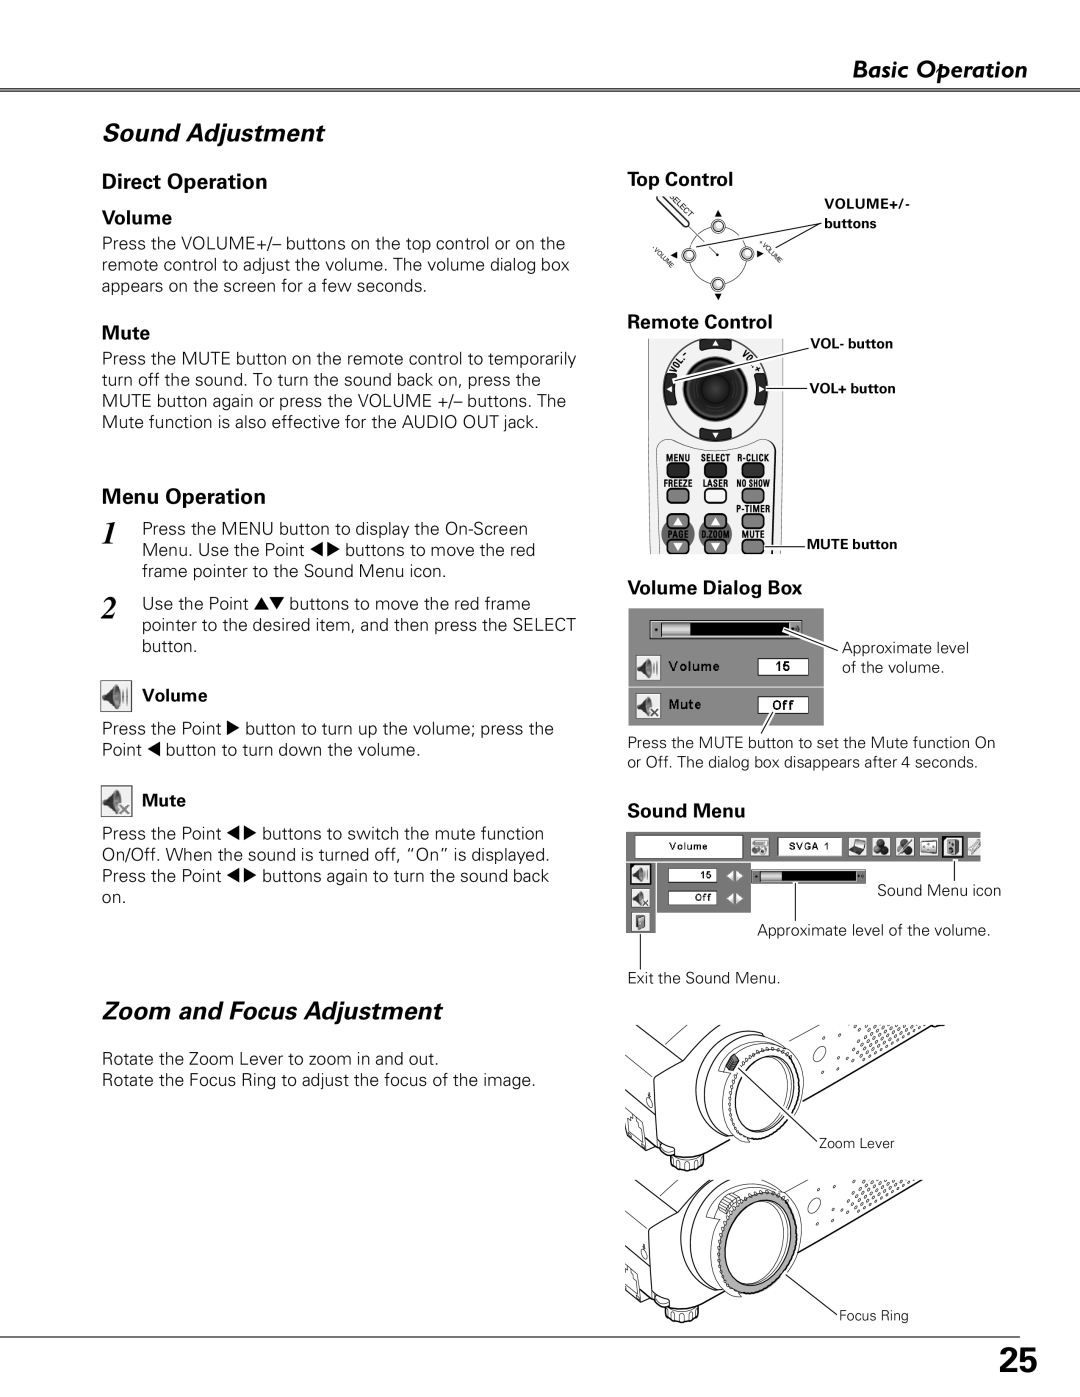 Sanyo PLC-XU84 Sound Adjustment, Zoom and Focus Adjustment, Direct Operation, Menu Operation, Basic Operation, Volume 